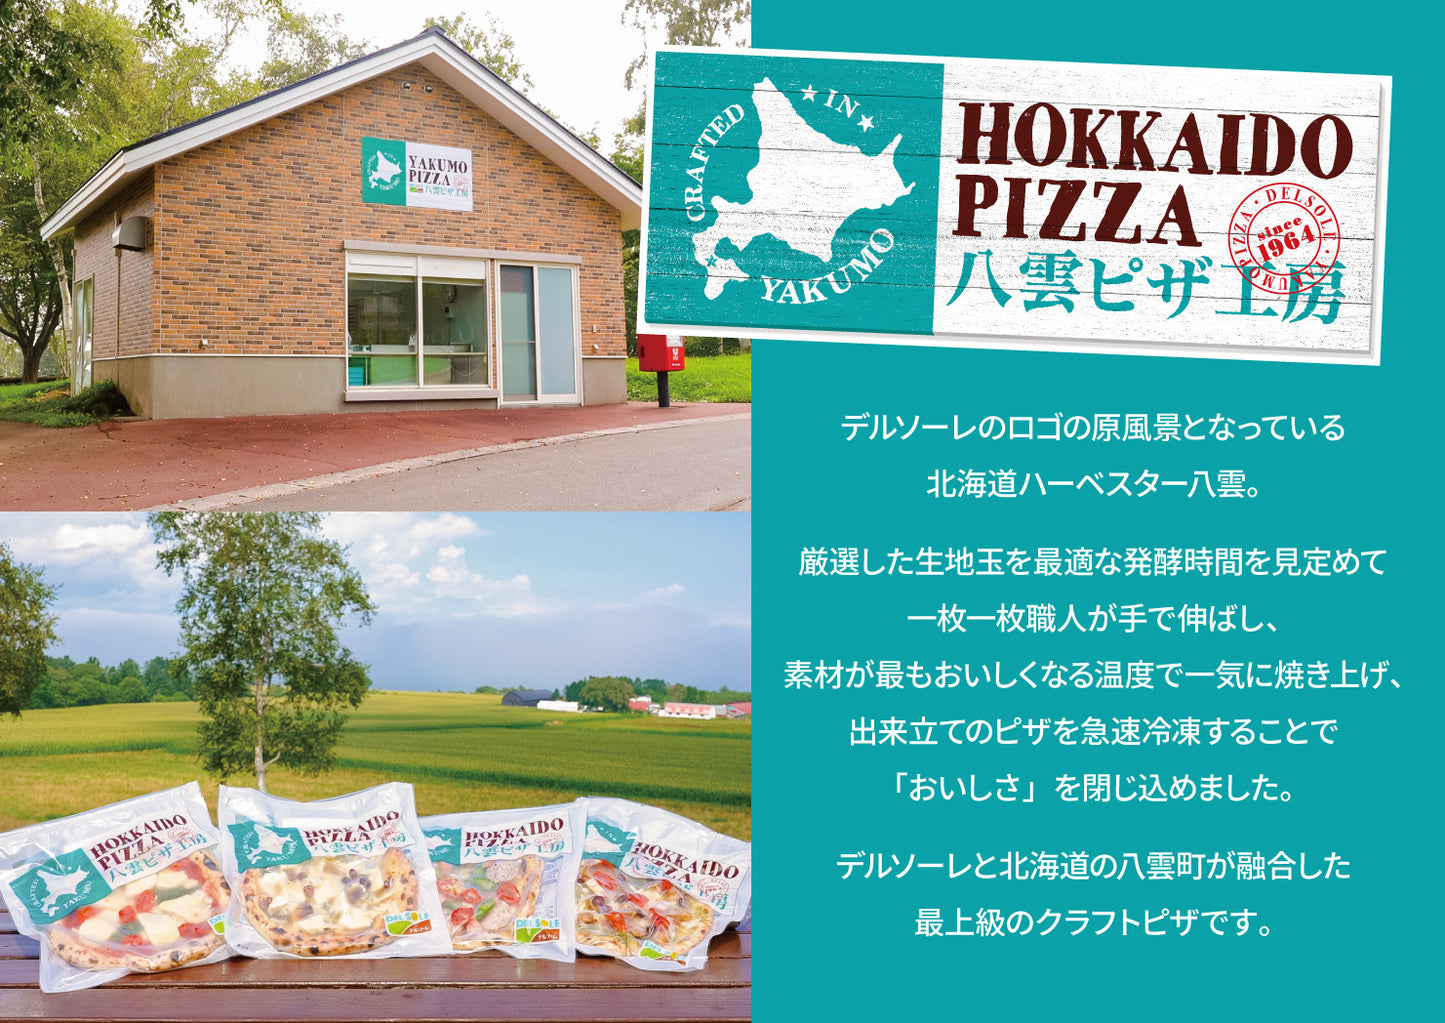 HOKKAIDO PIZZA 食べ比べセット